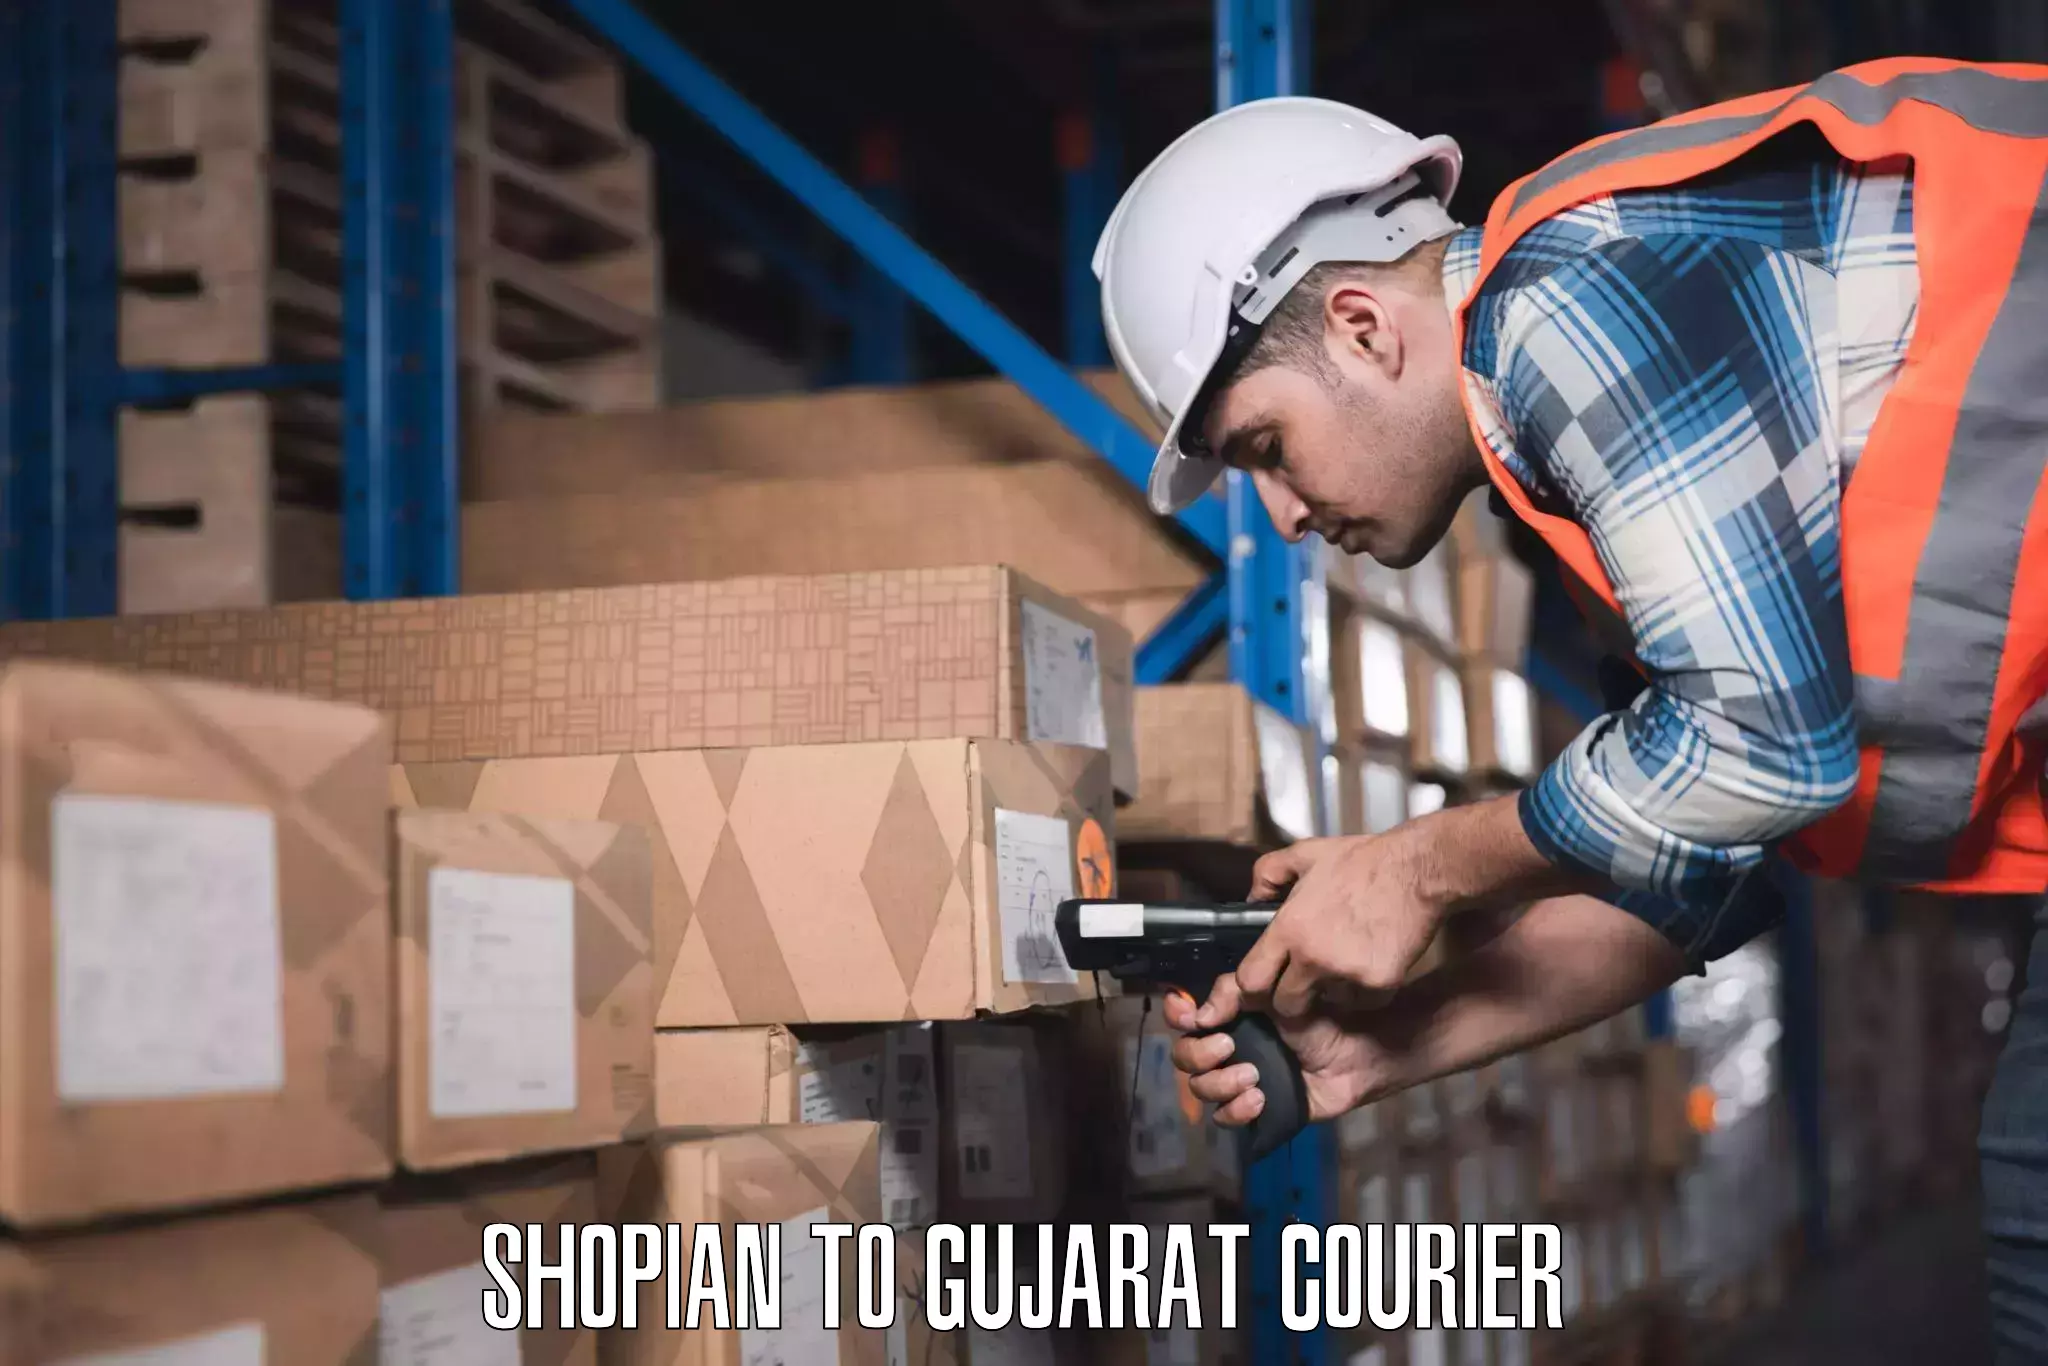 Luggage transport consultancy Shopian to Gujarat